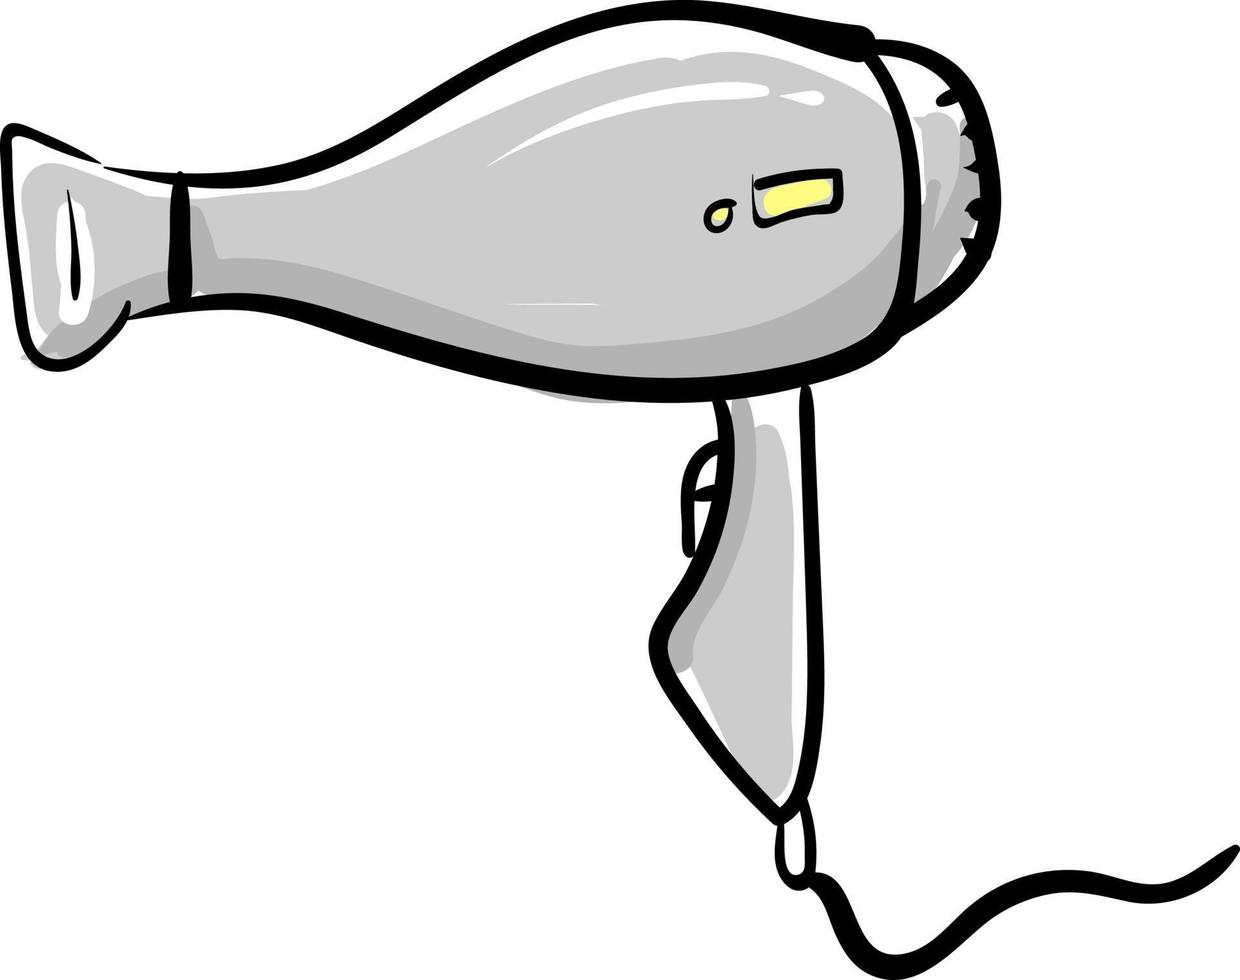 secador de pelo, ilustración, vector sobre fondo blanco.